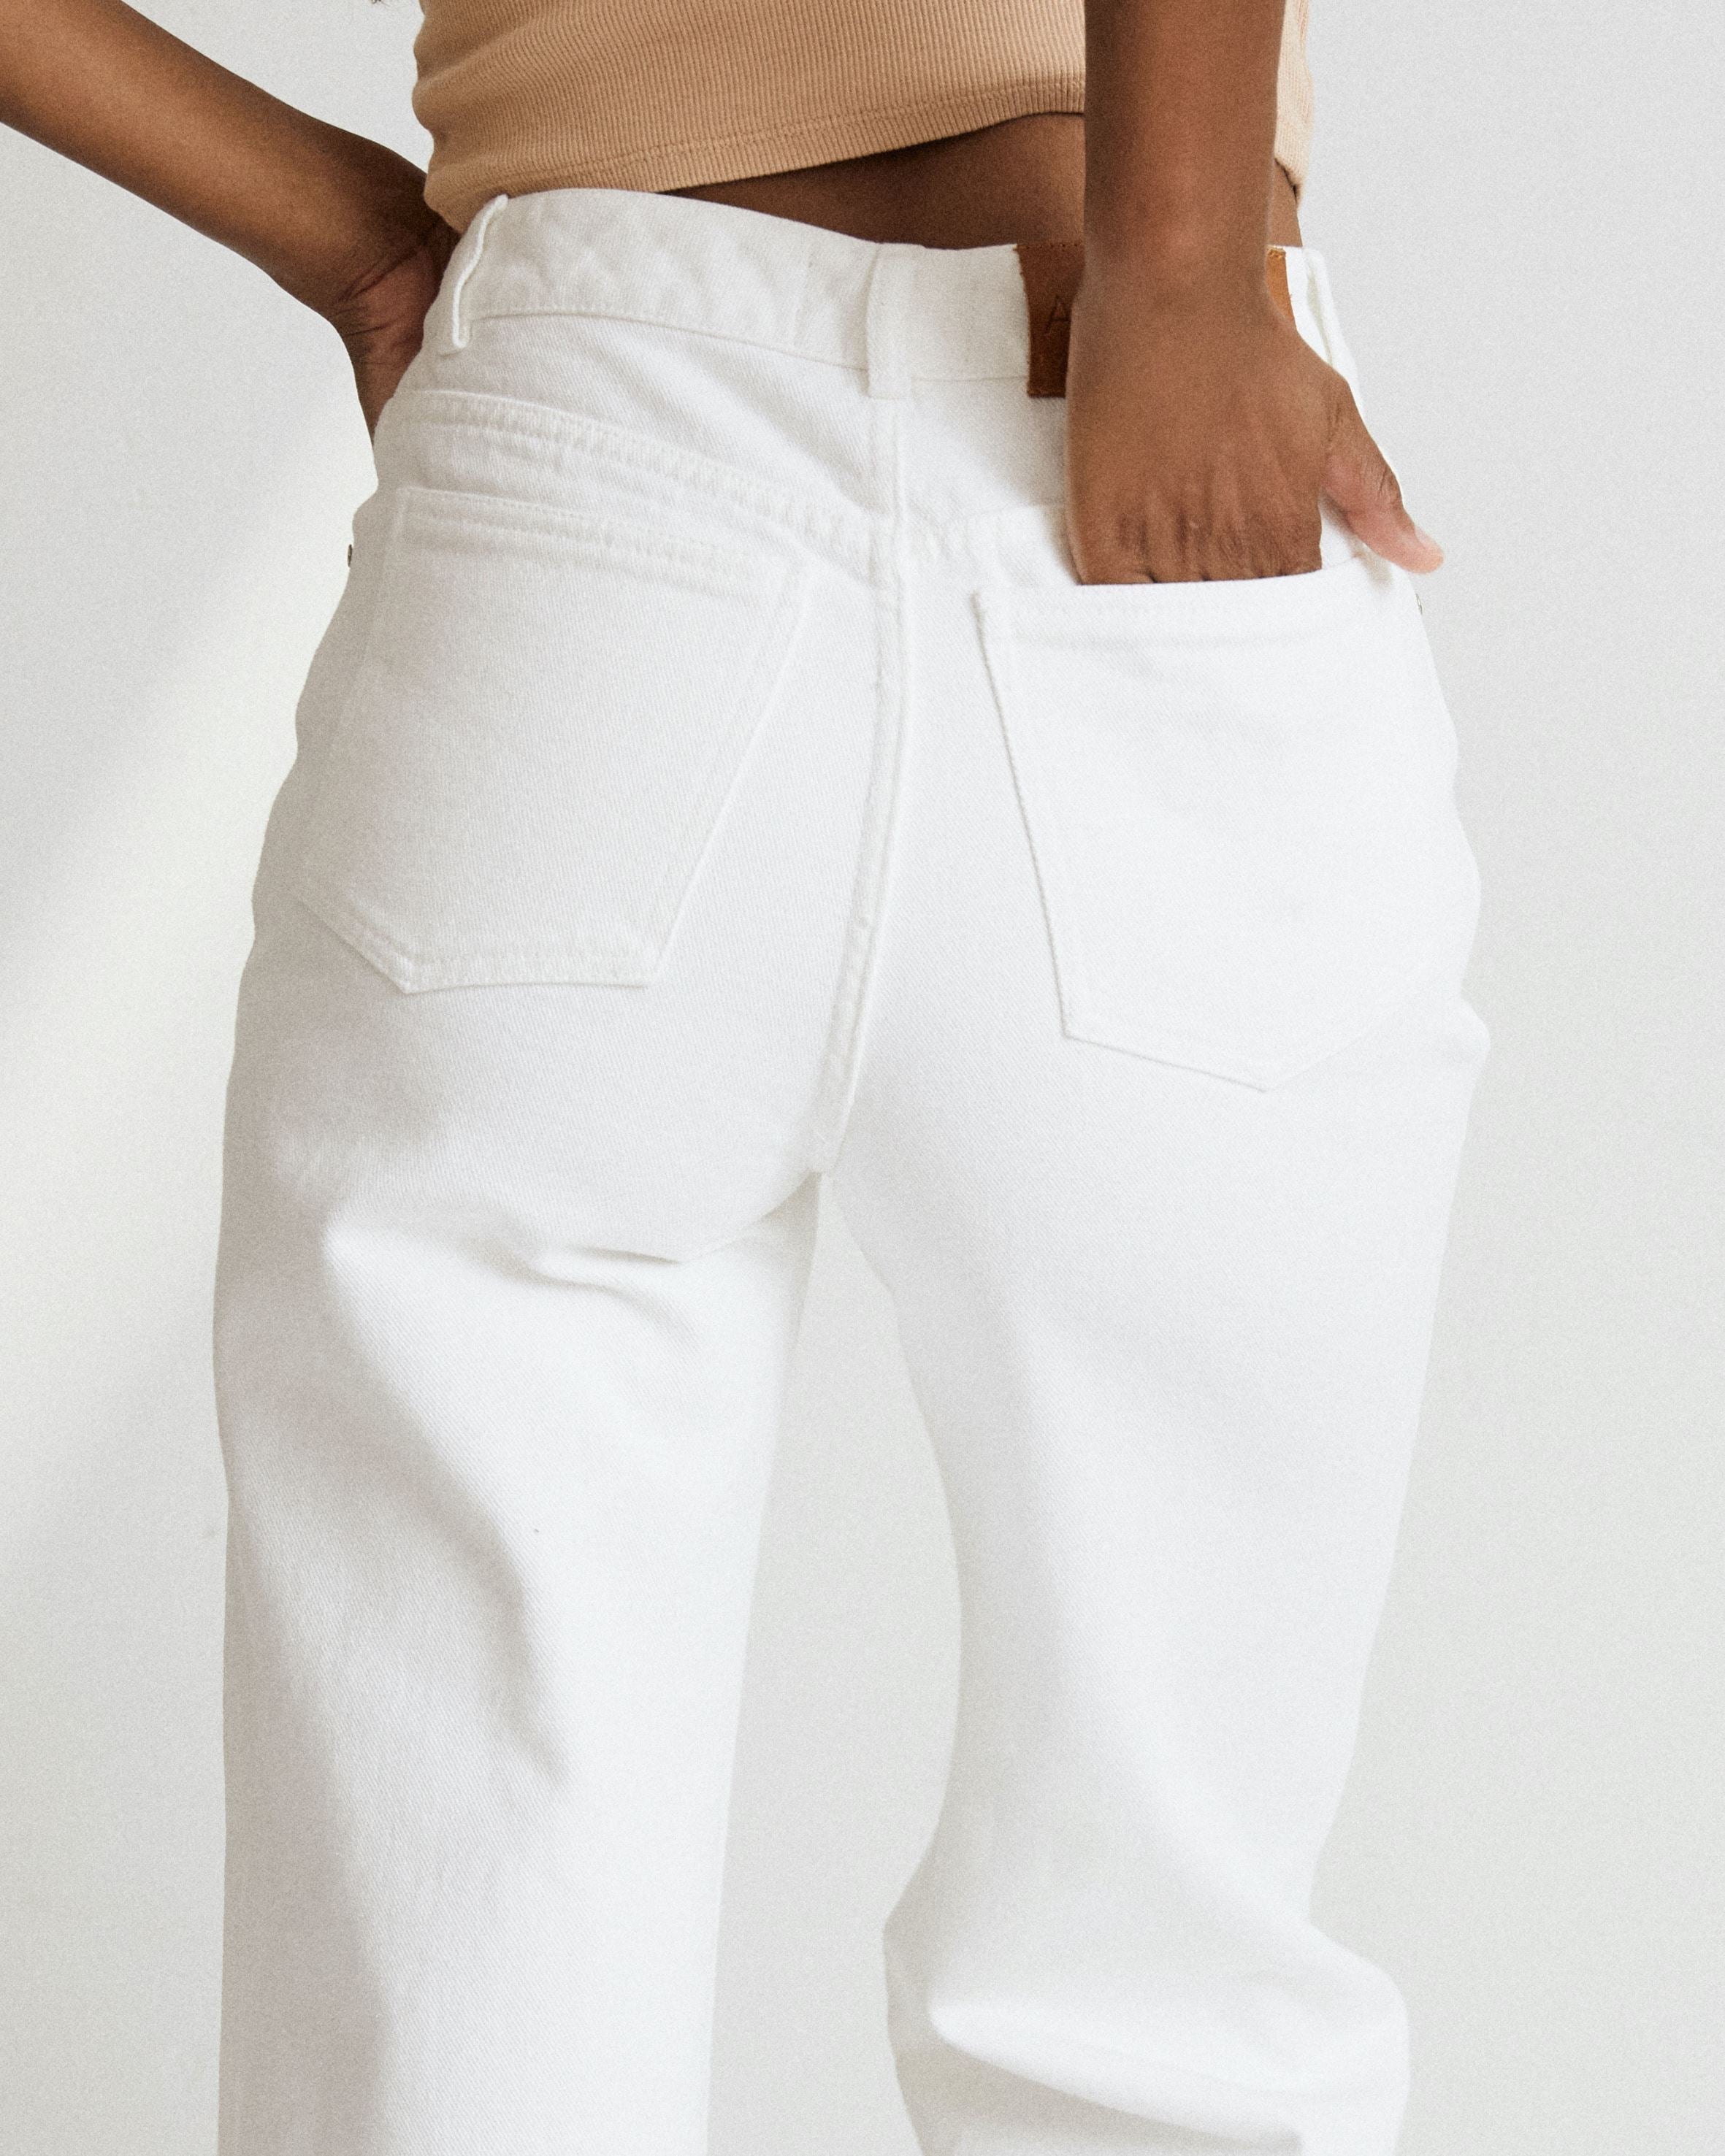 piano-bright-white-jeans-pants-alohas-506446.jpg